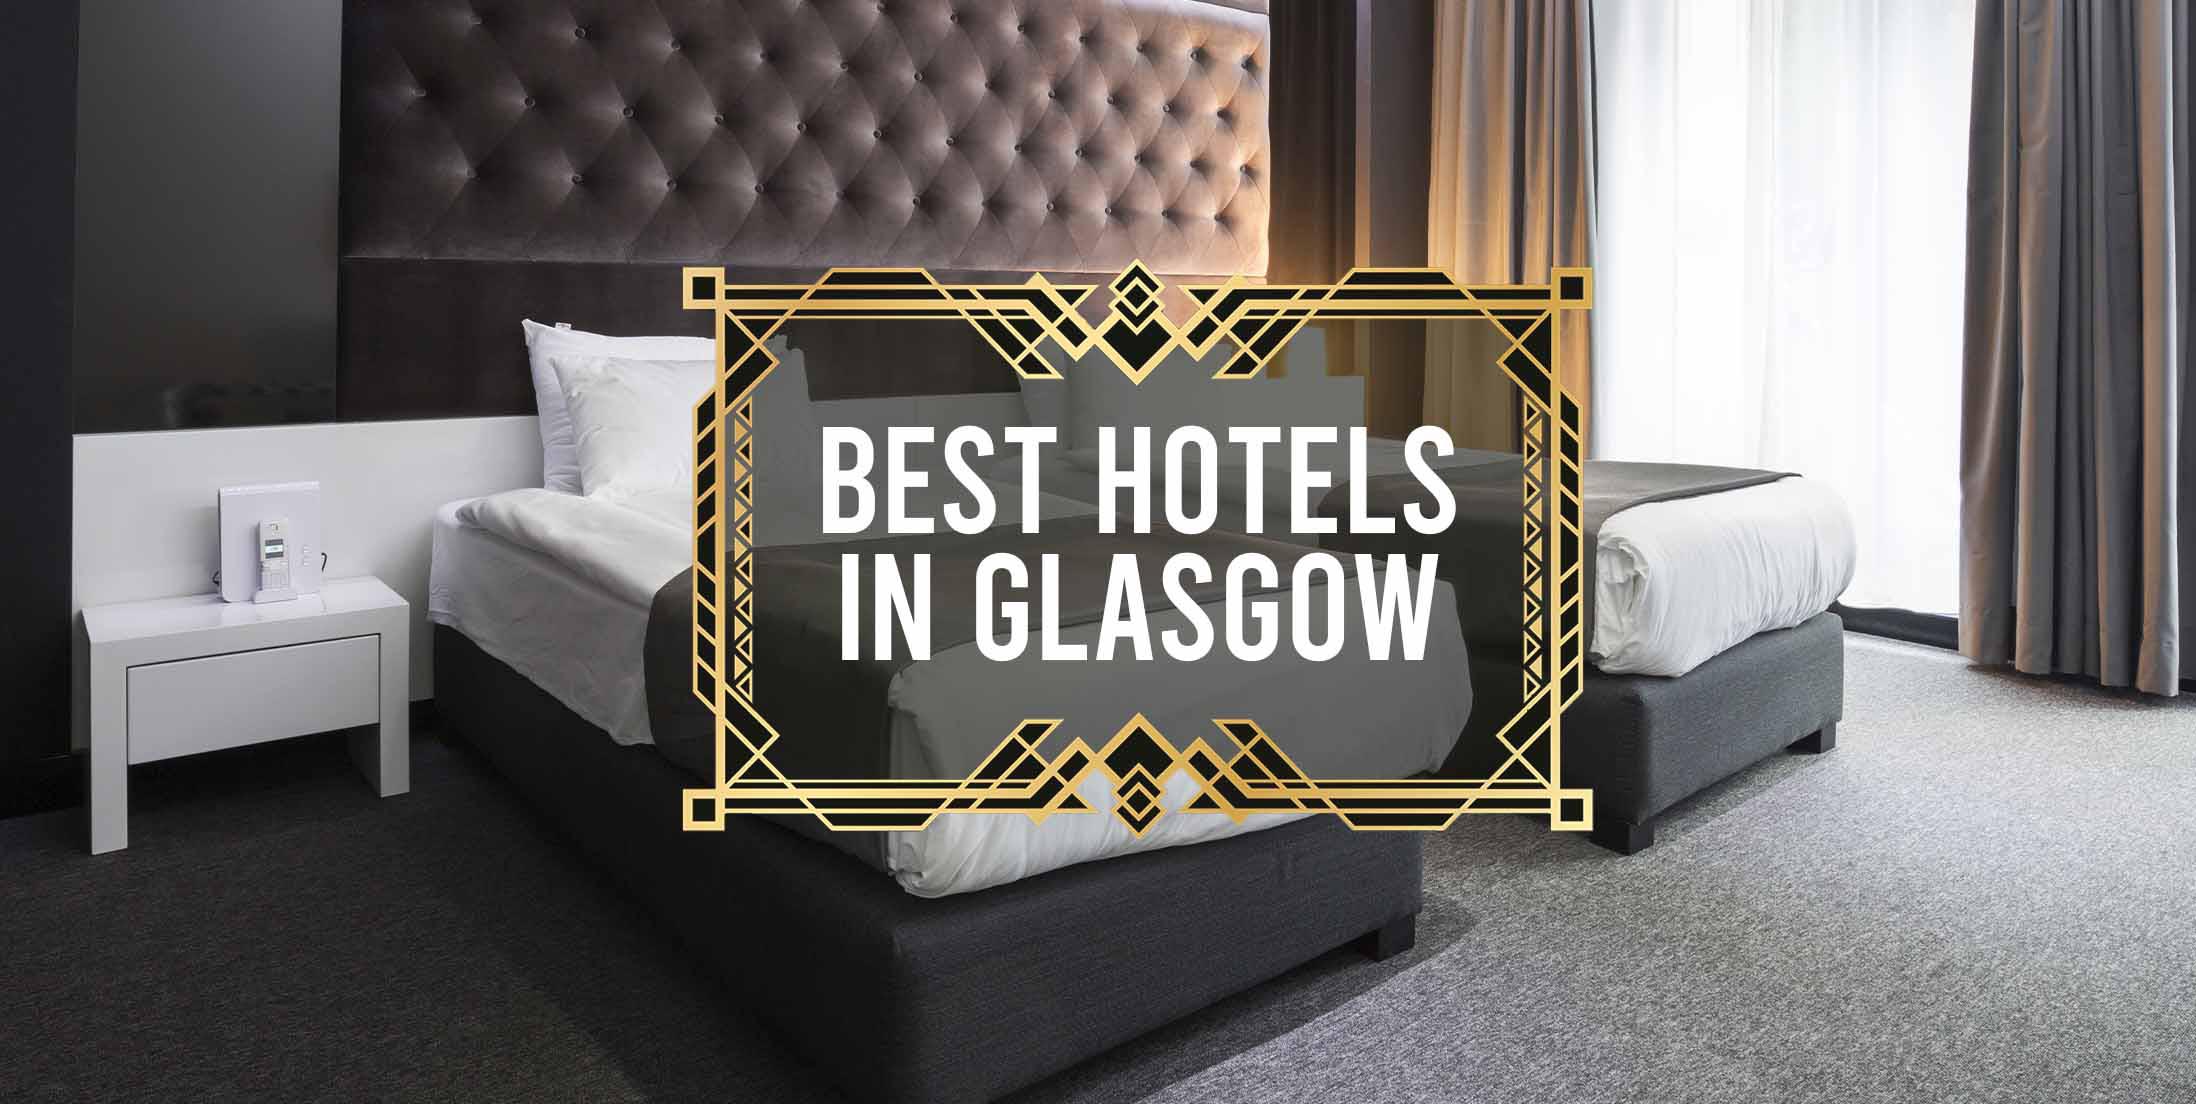 Best Hotels in Glasgow